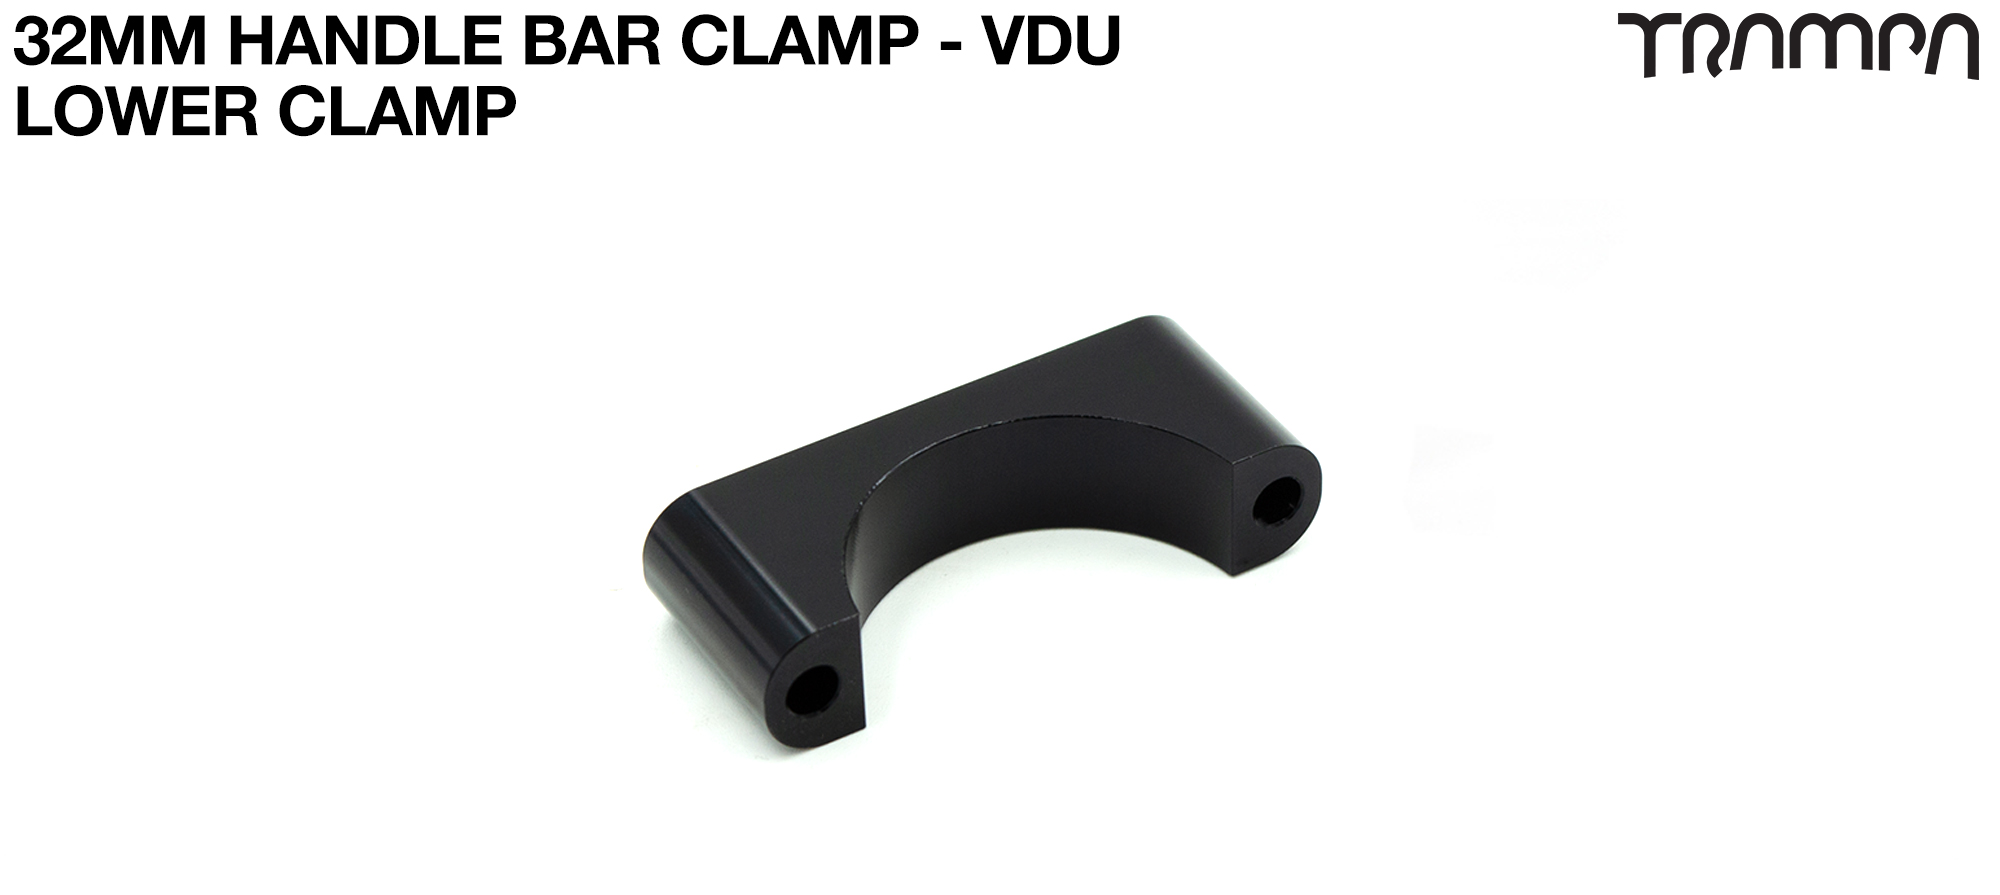 VESC DISPLAY UNIT - Lower Clamp for 32mm Handle Bars